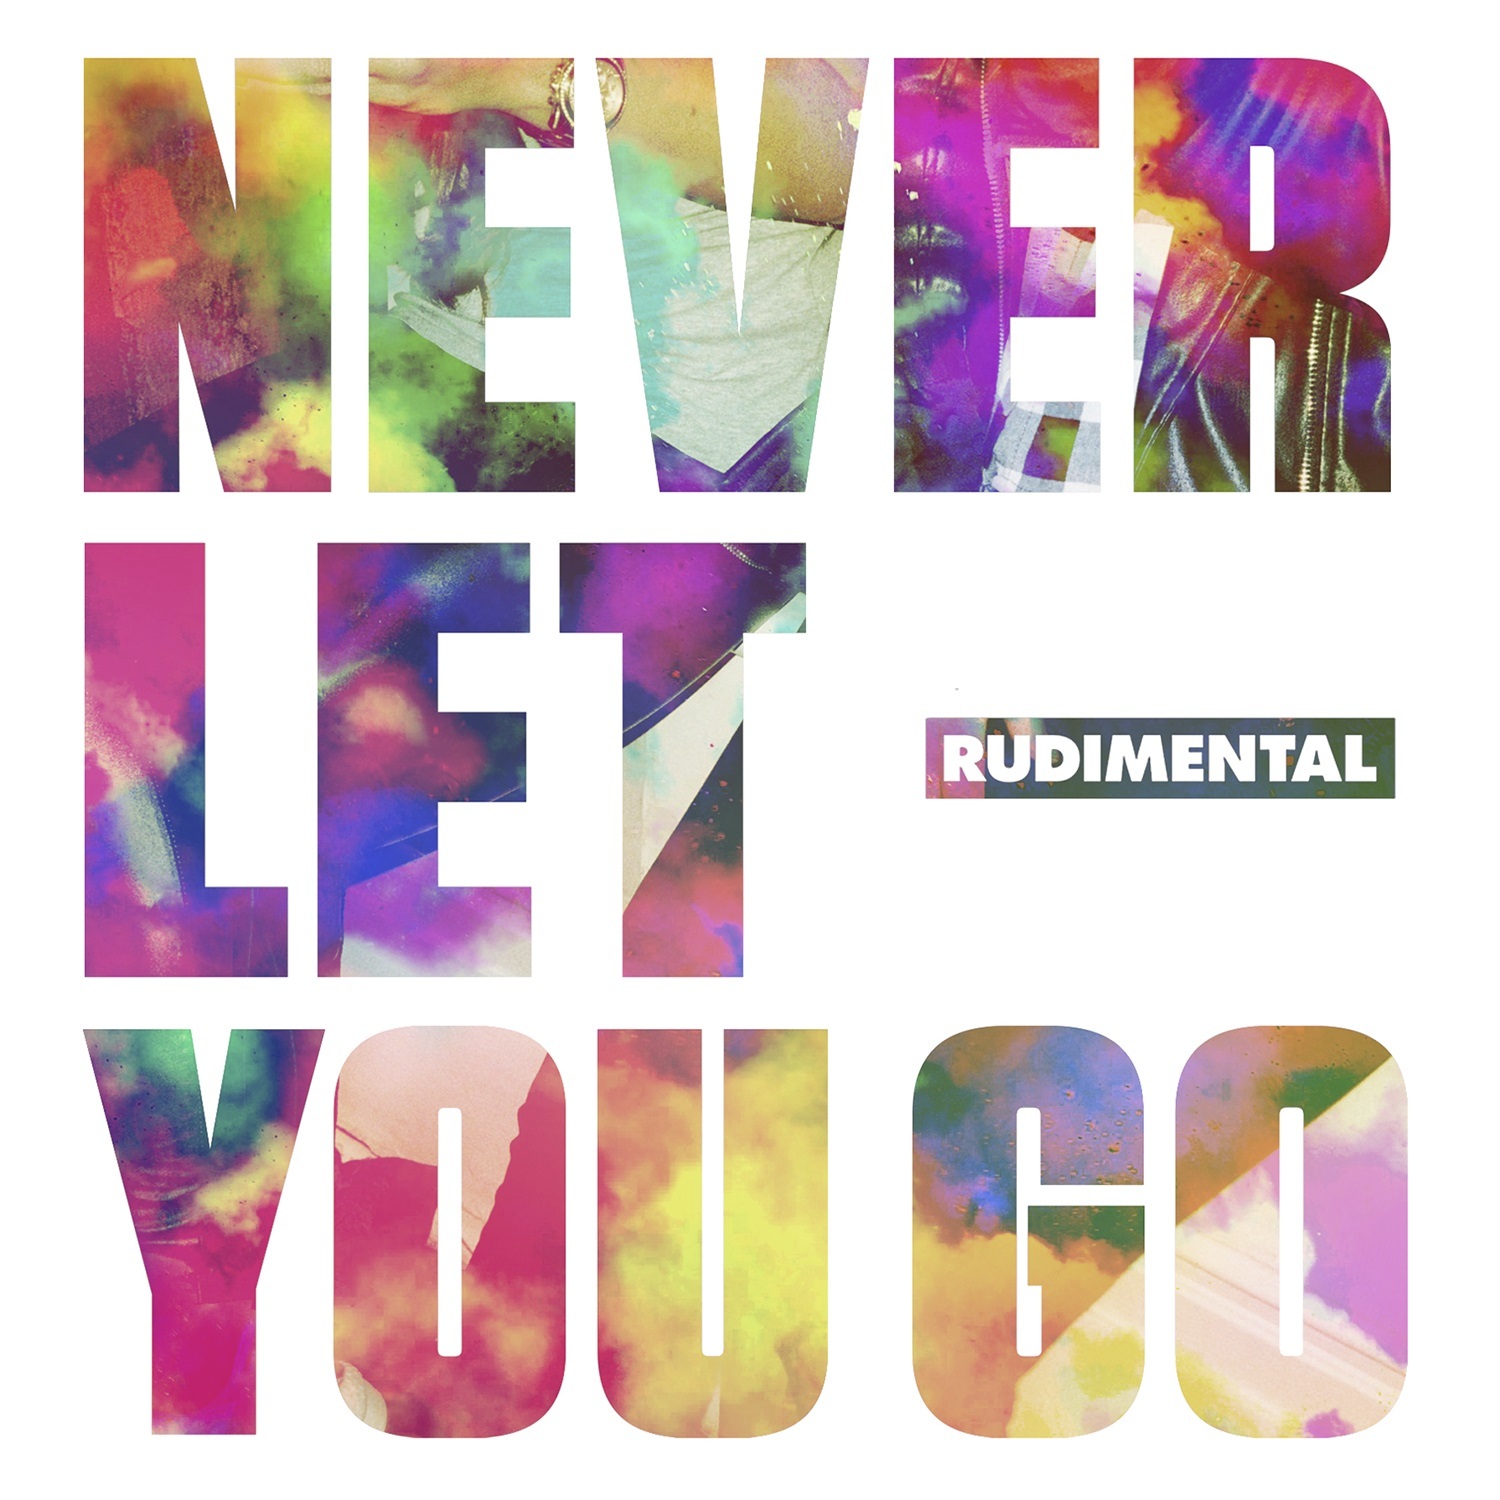 Rudimental – Never Let You Go (Official Audio)